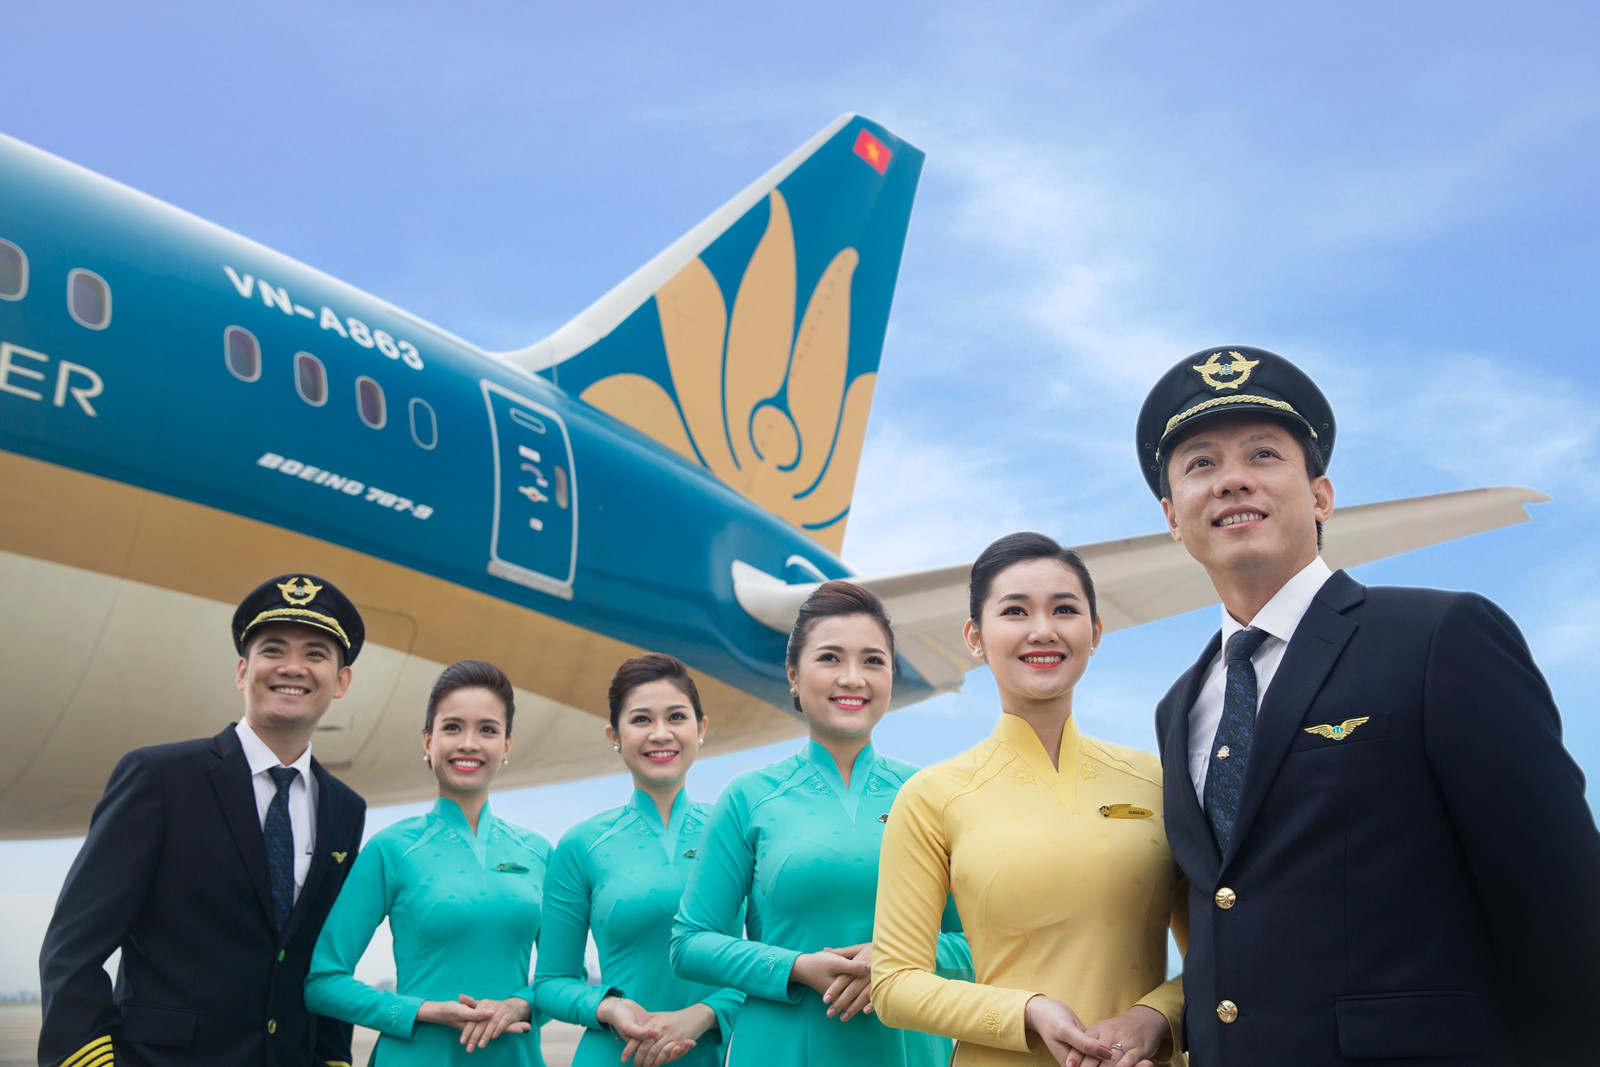 Review of a Vietnam Airlines flight